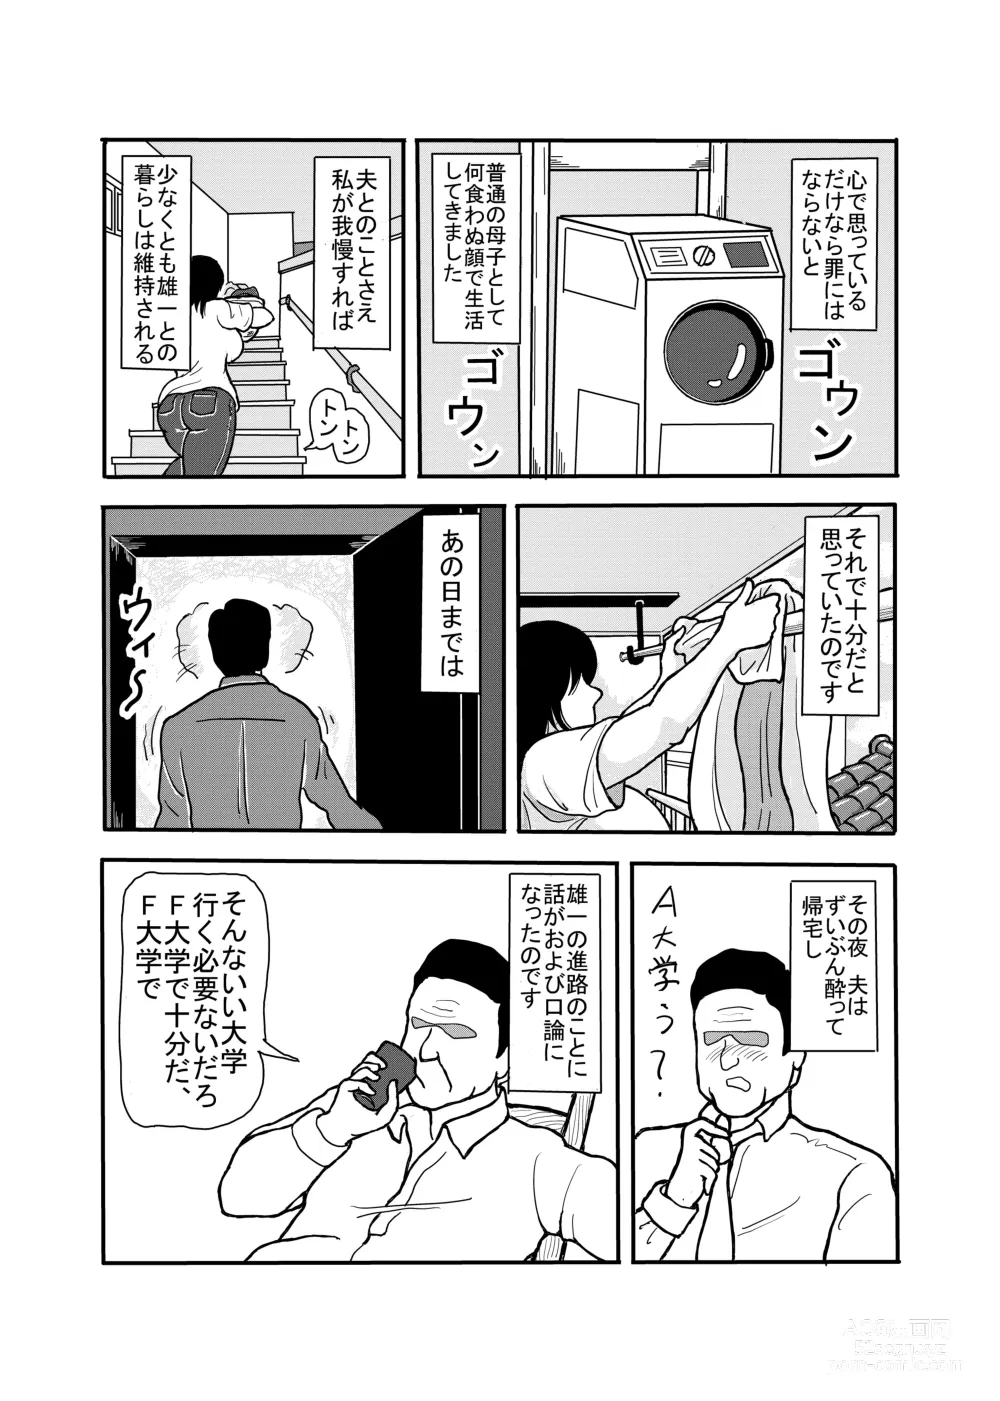 Page 10 of doujinshi 息子と二人きりで暮らすことになりました―初めての膣内射精―